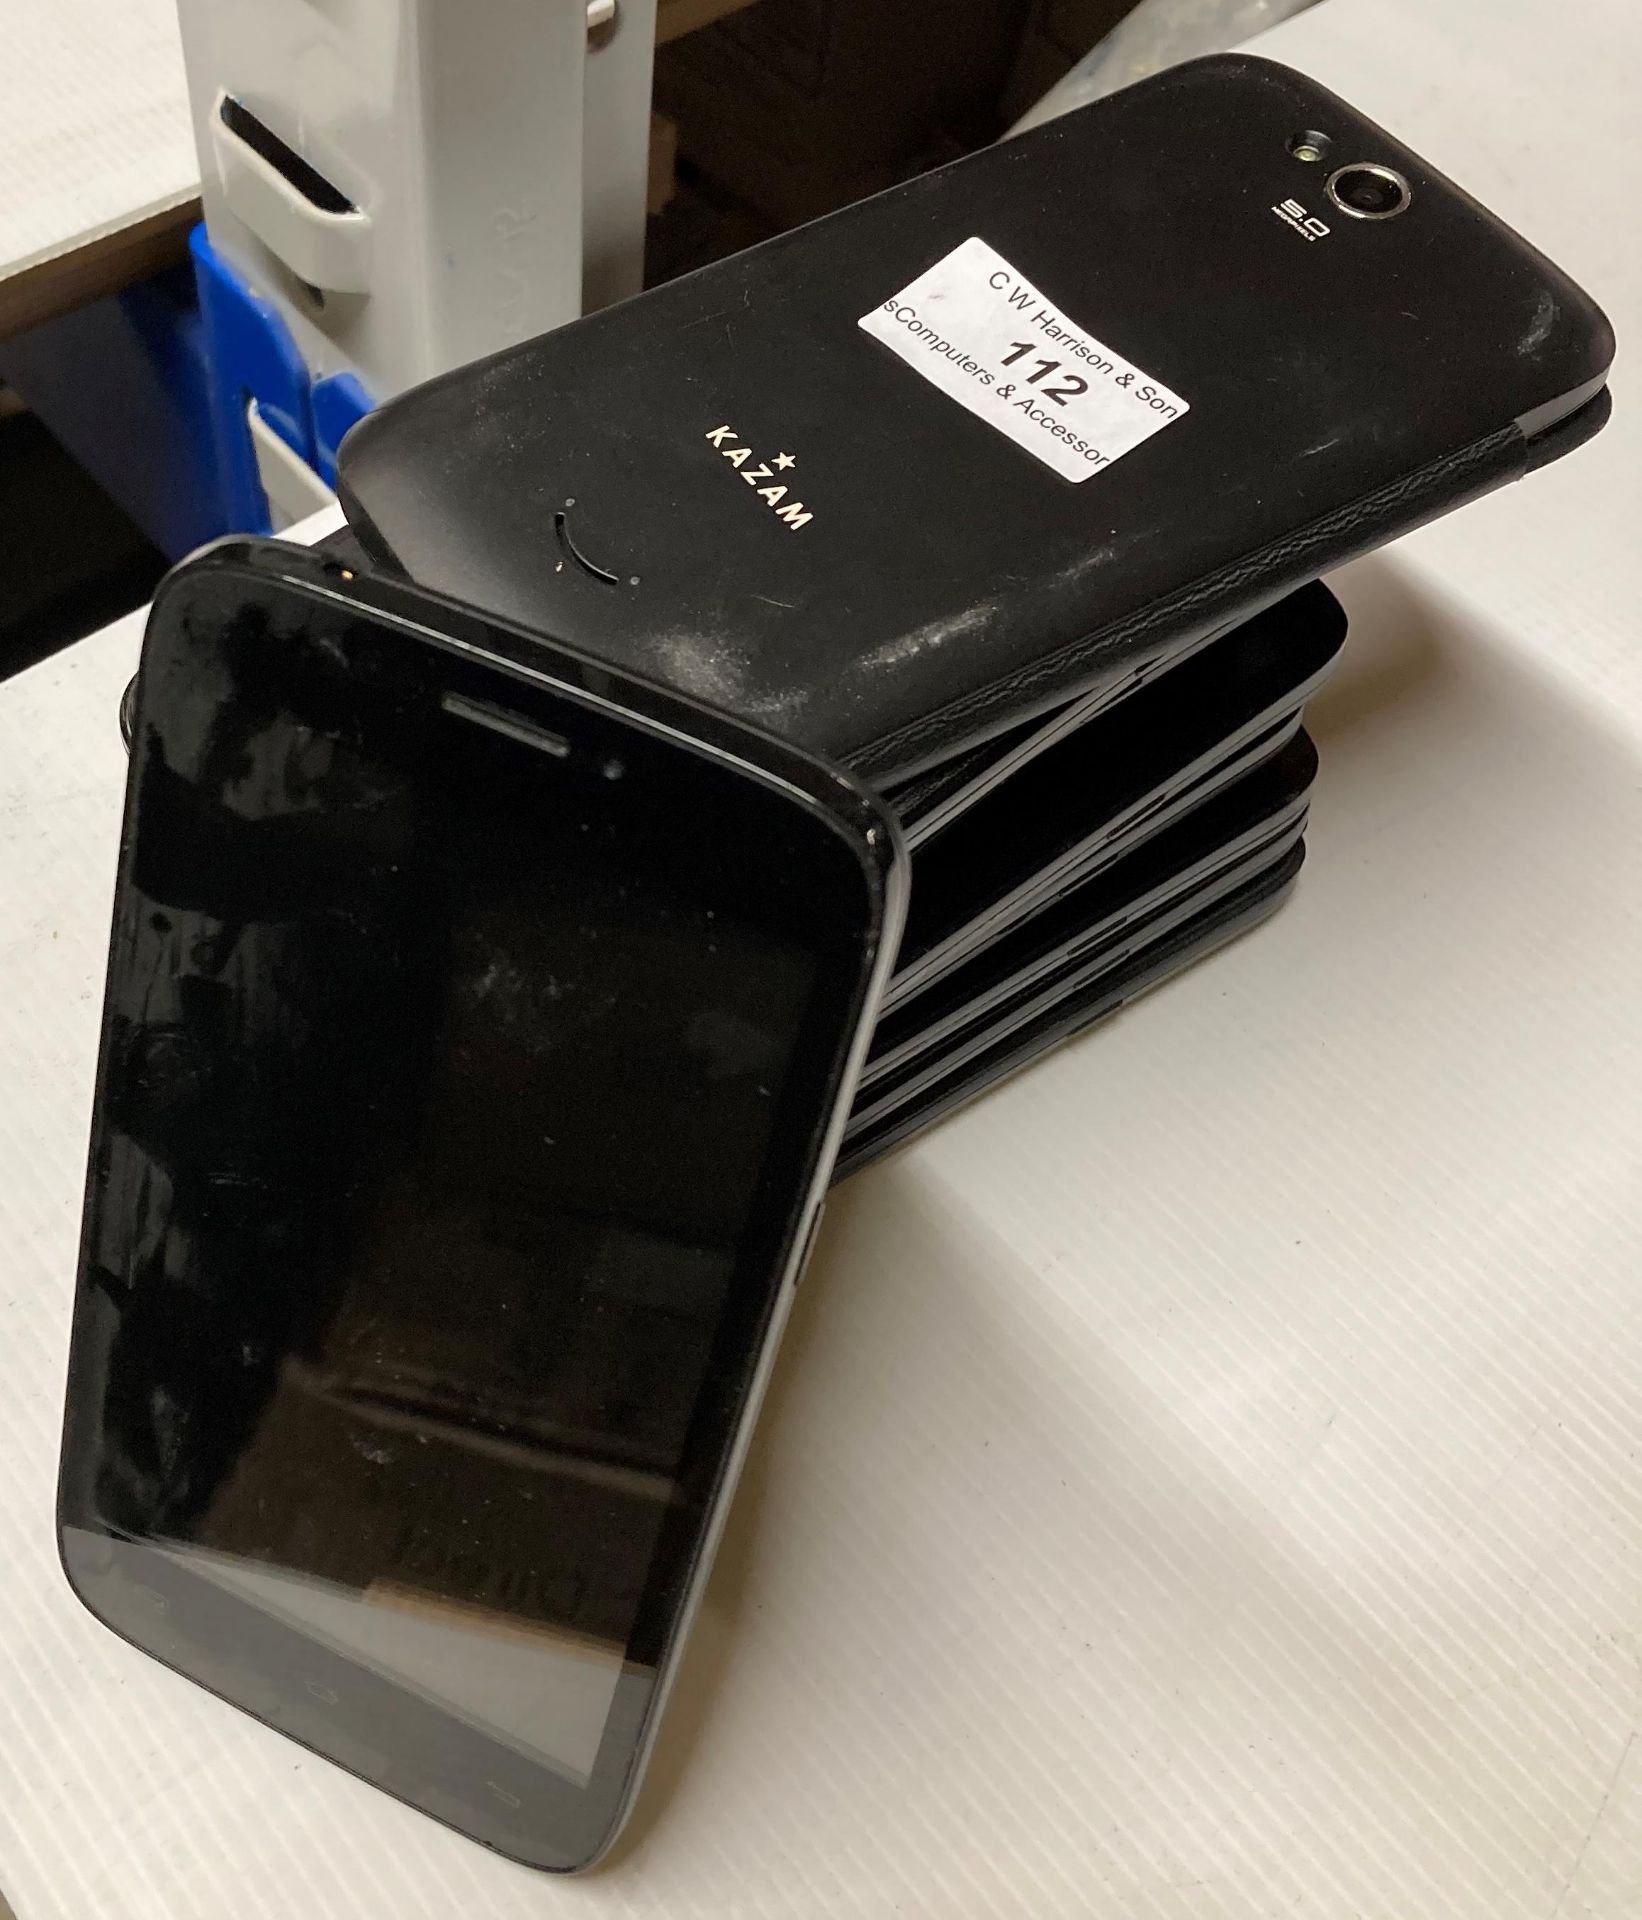 10 x Kazam 5MP Mobile Phones - no chargers (Saleroom location: F11)